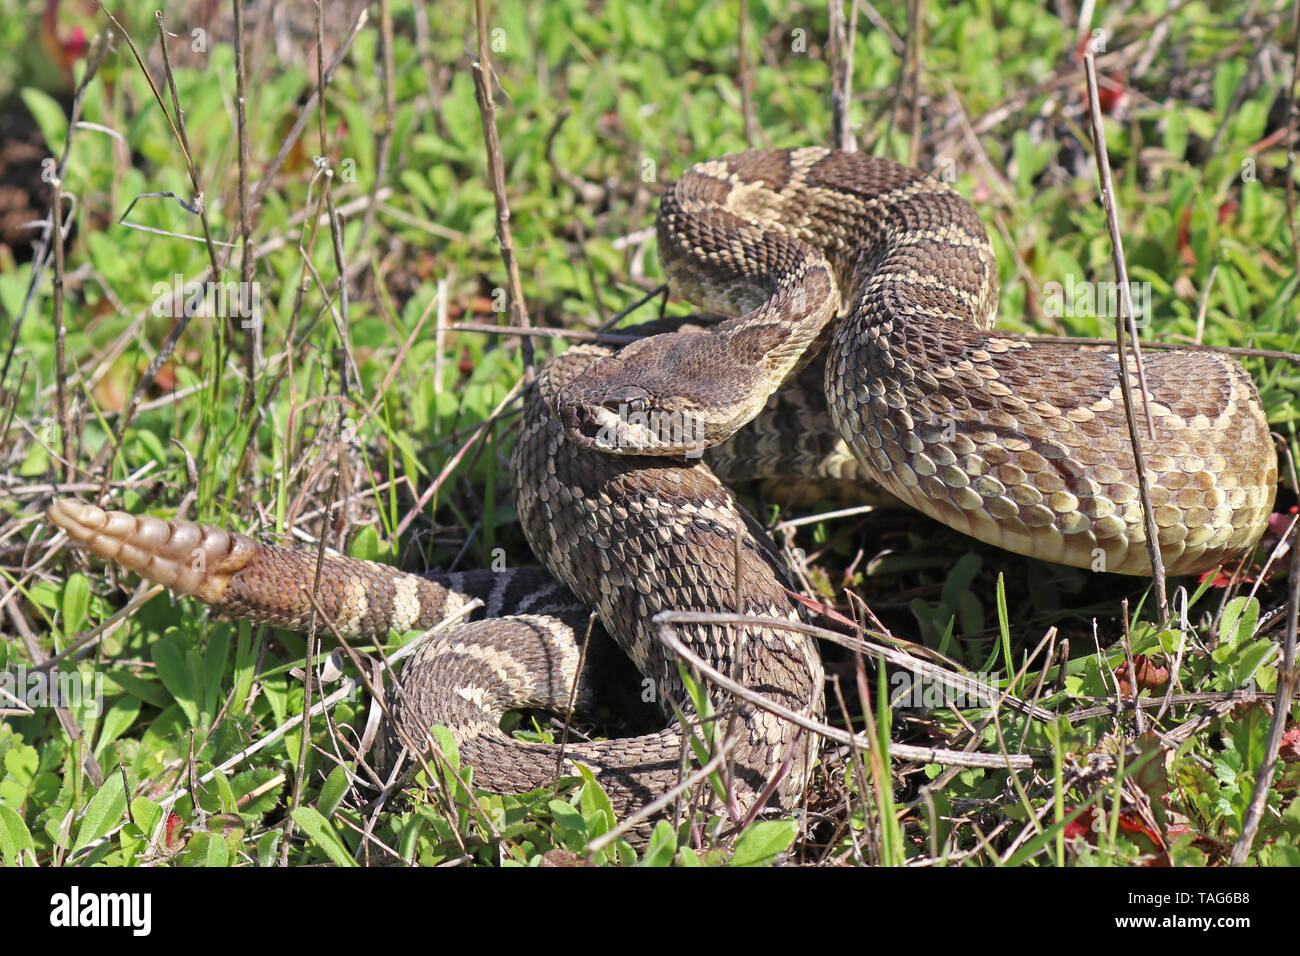 Southern Pacific Rattlesnake (Crotalus oreganus helleri) Stock Photo